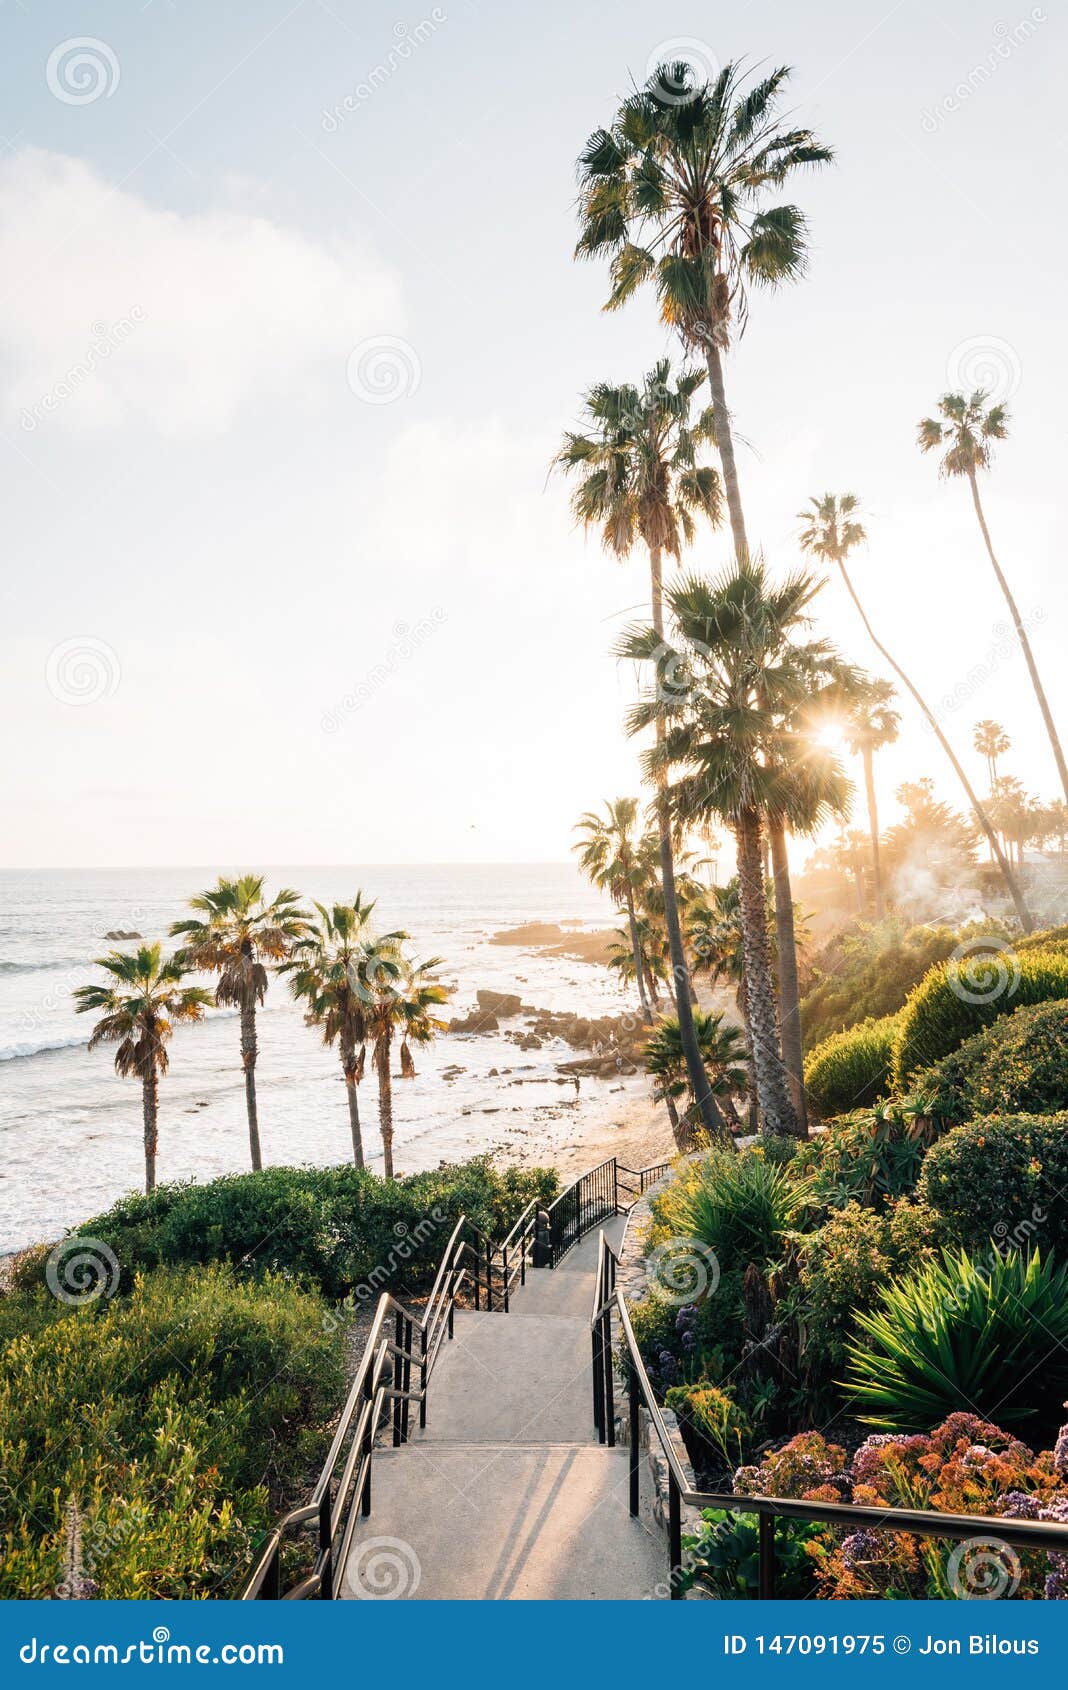 staircase and palm trees at heisler park, in laguna beach, orange county, california